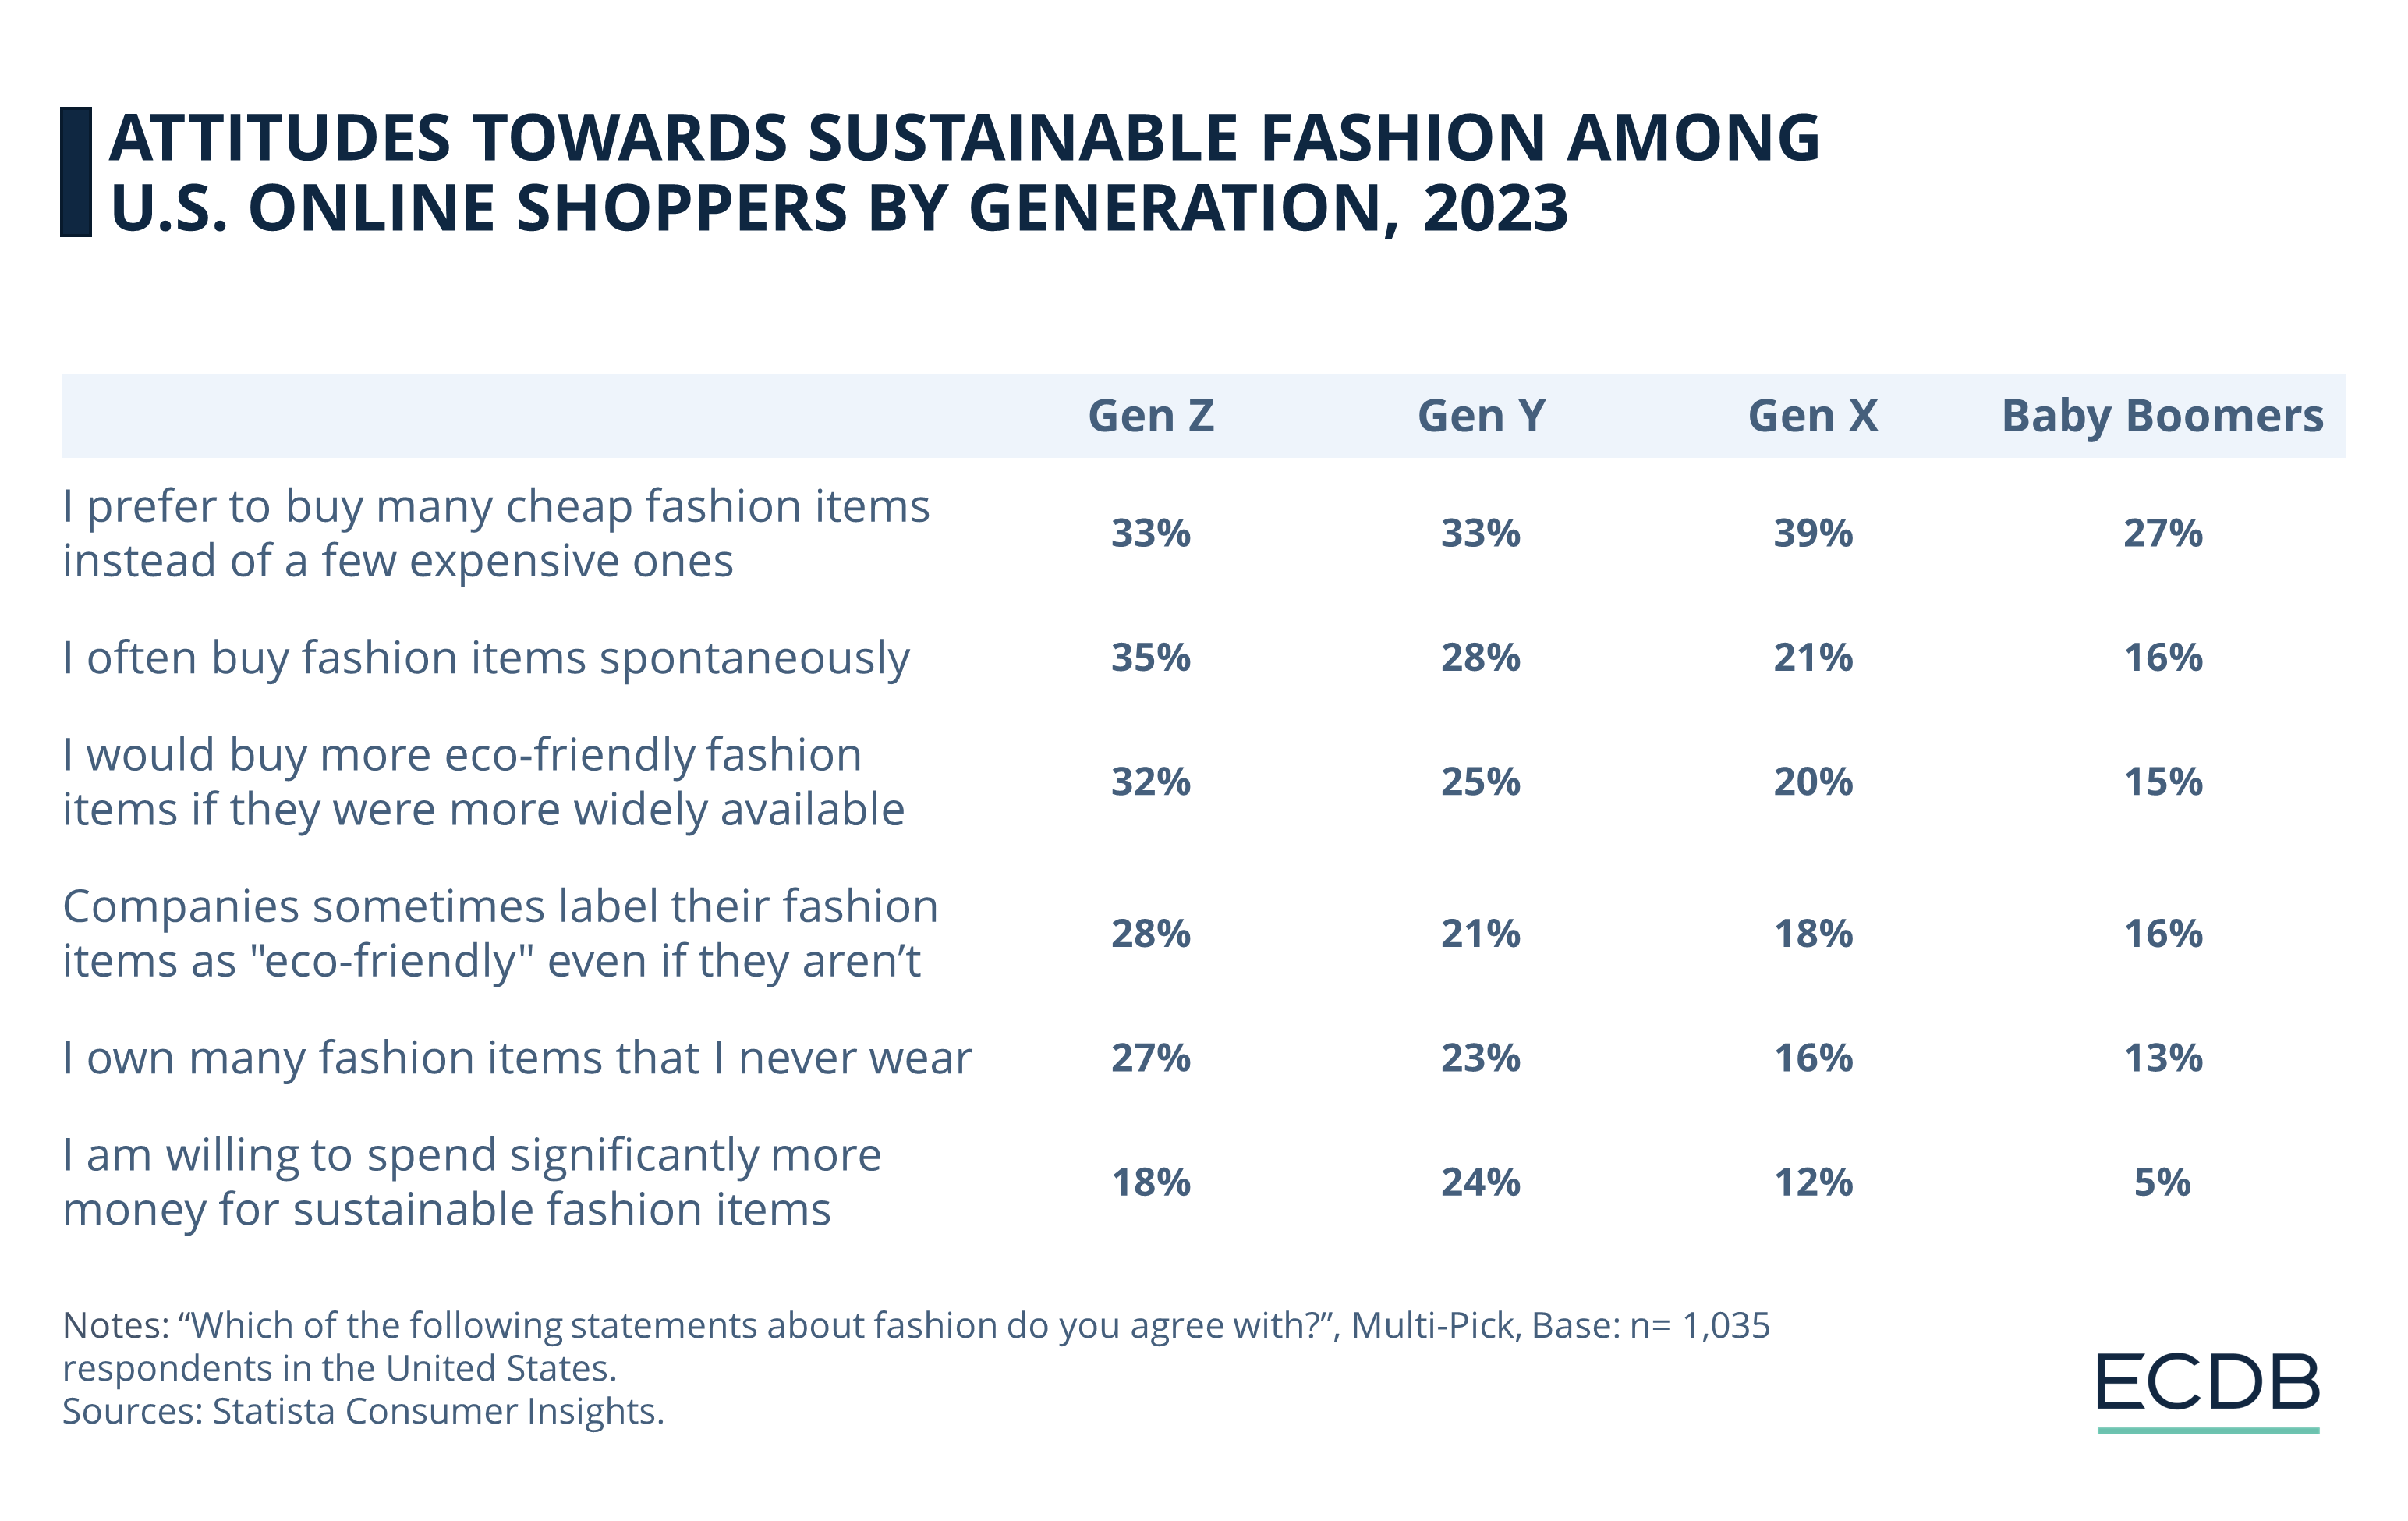 Attitudes Towards Sustainable Fashion Among U.S. Online Shoppers by Generation, 2023